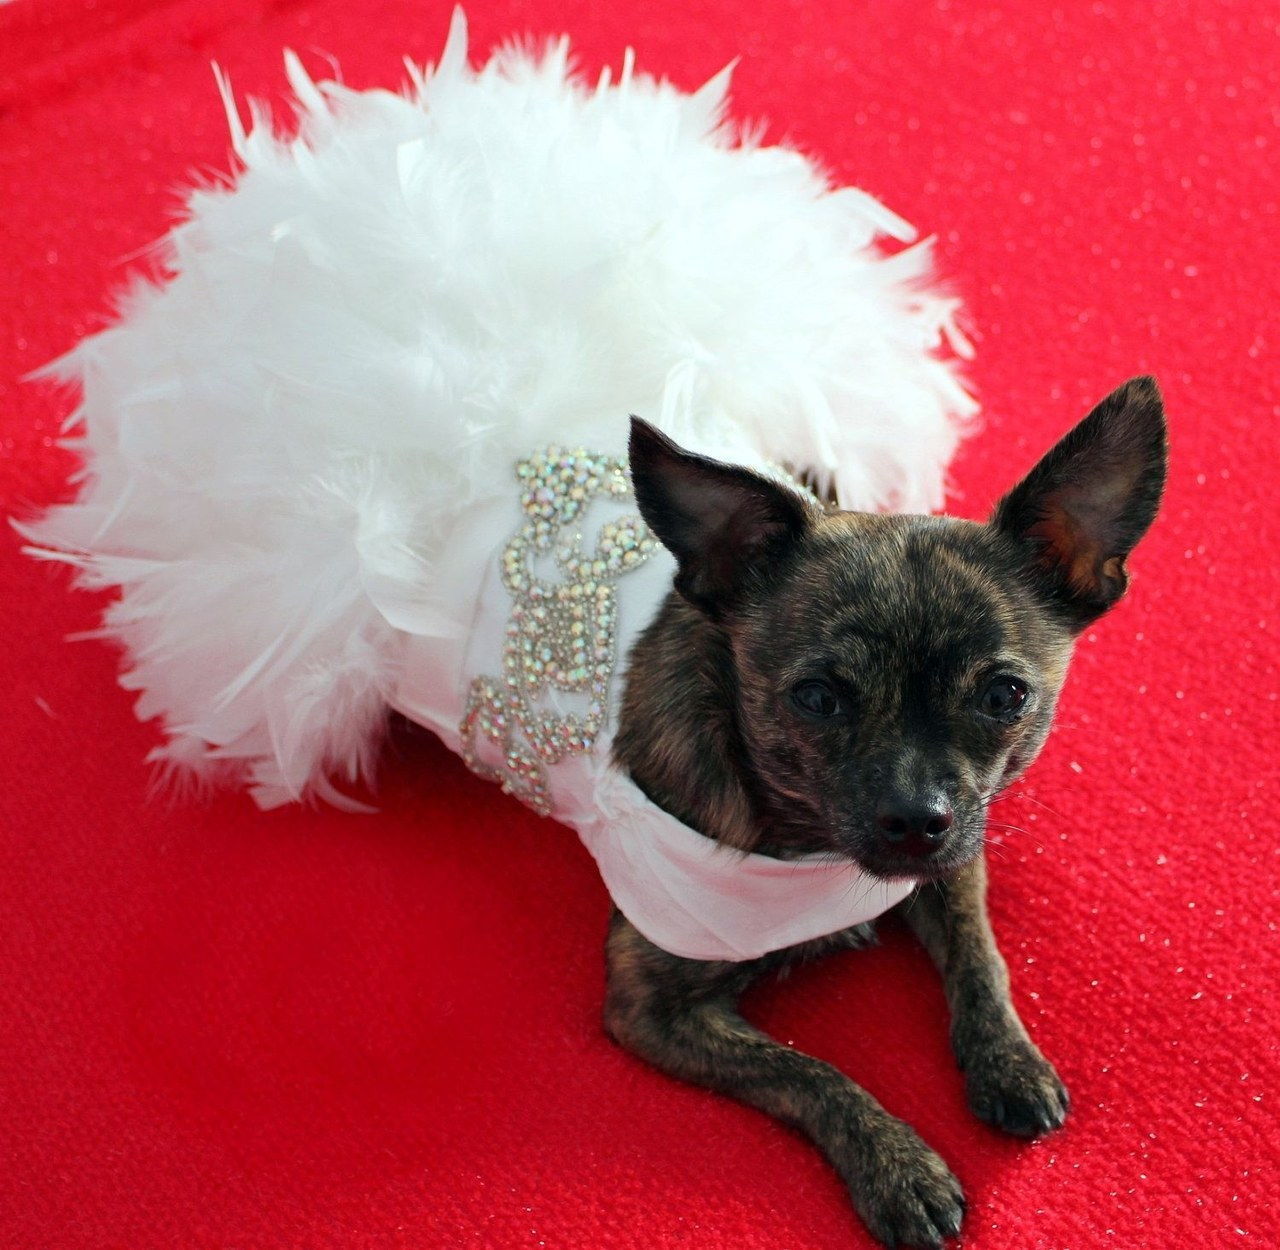 5 dogs wearing wedding dresses on etsy 0404